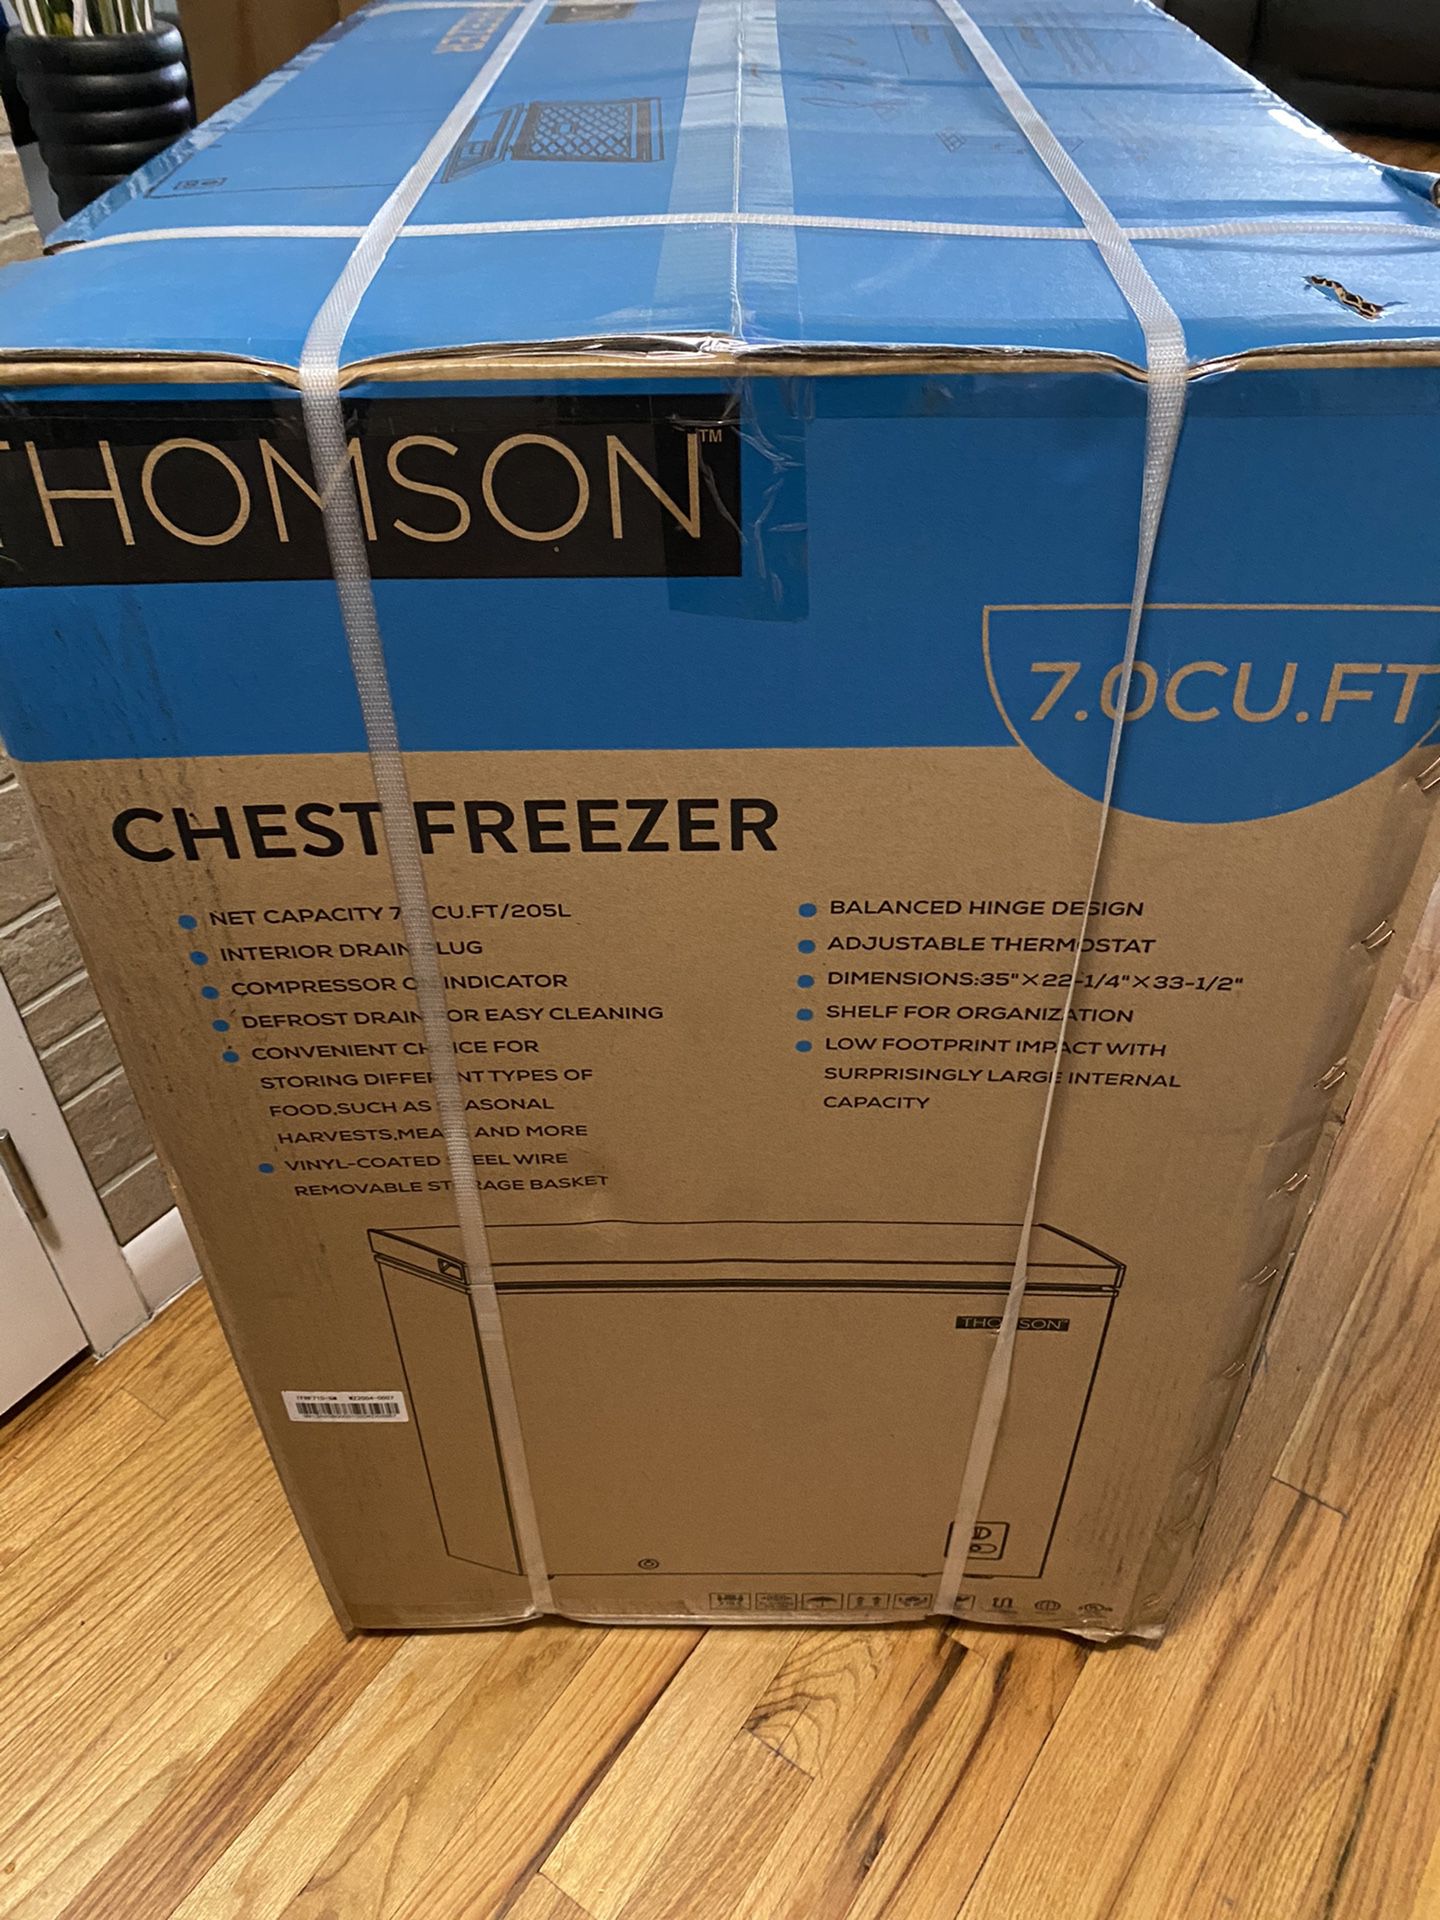 Thomson chest freezer 7.0